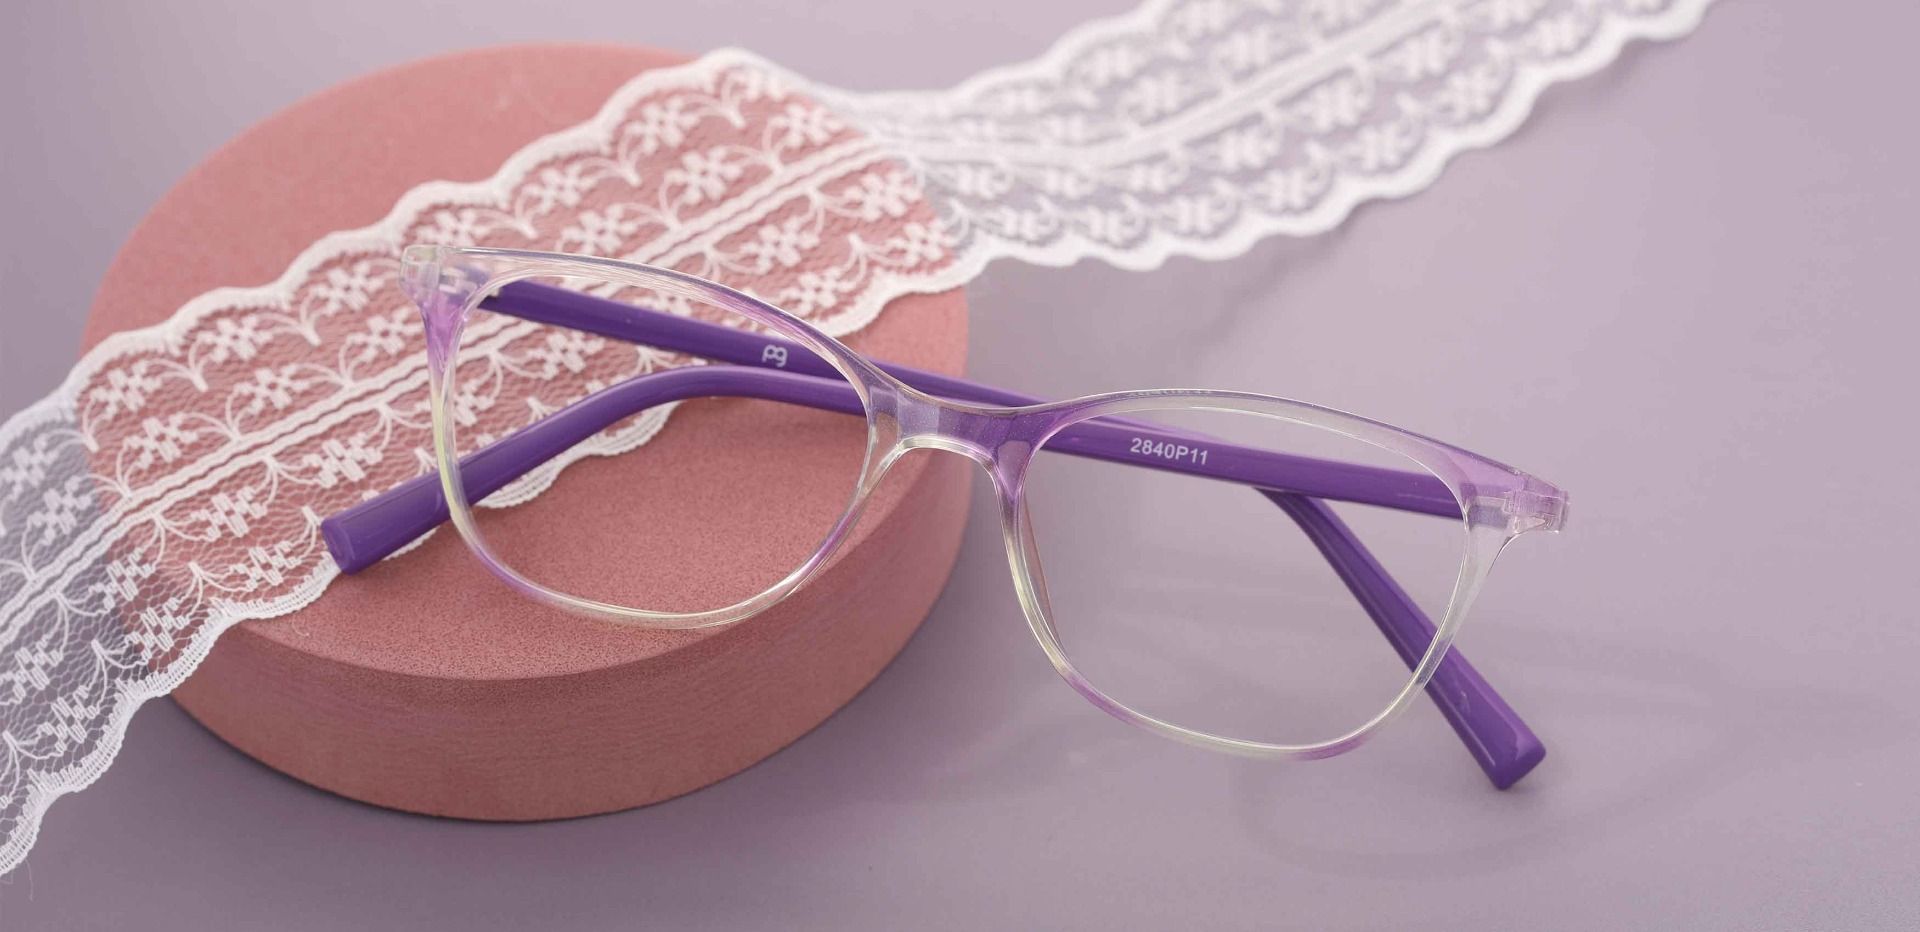 Bravo Rectangle Lined Bifocal Glasses - Purple